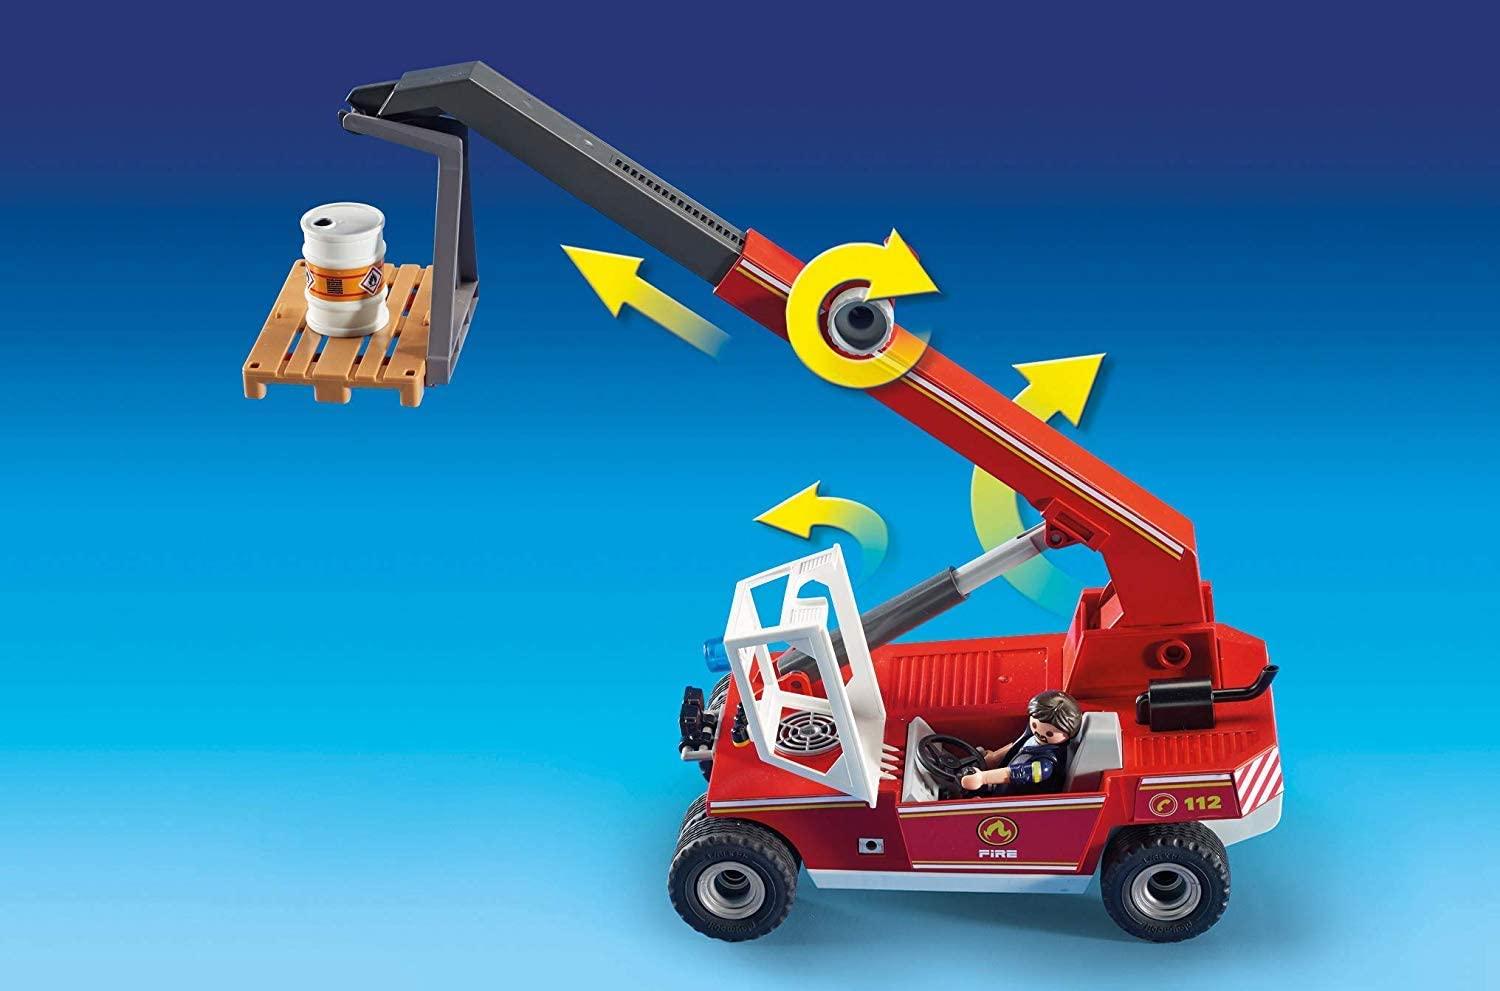 Playmobil 9465 Fire Crane Toymaster Ballina